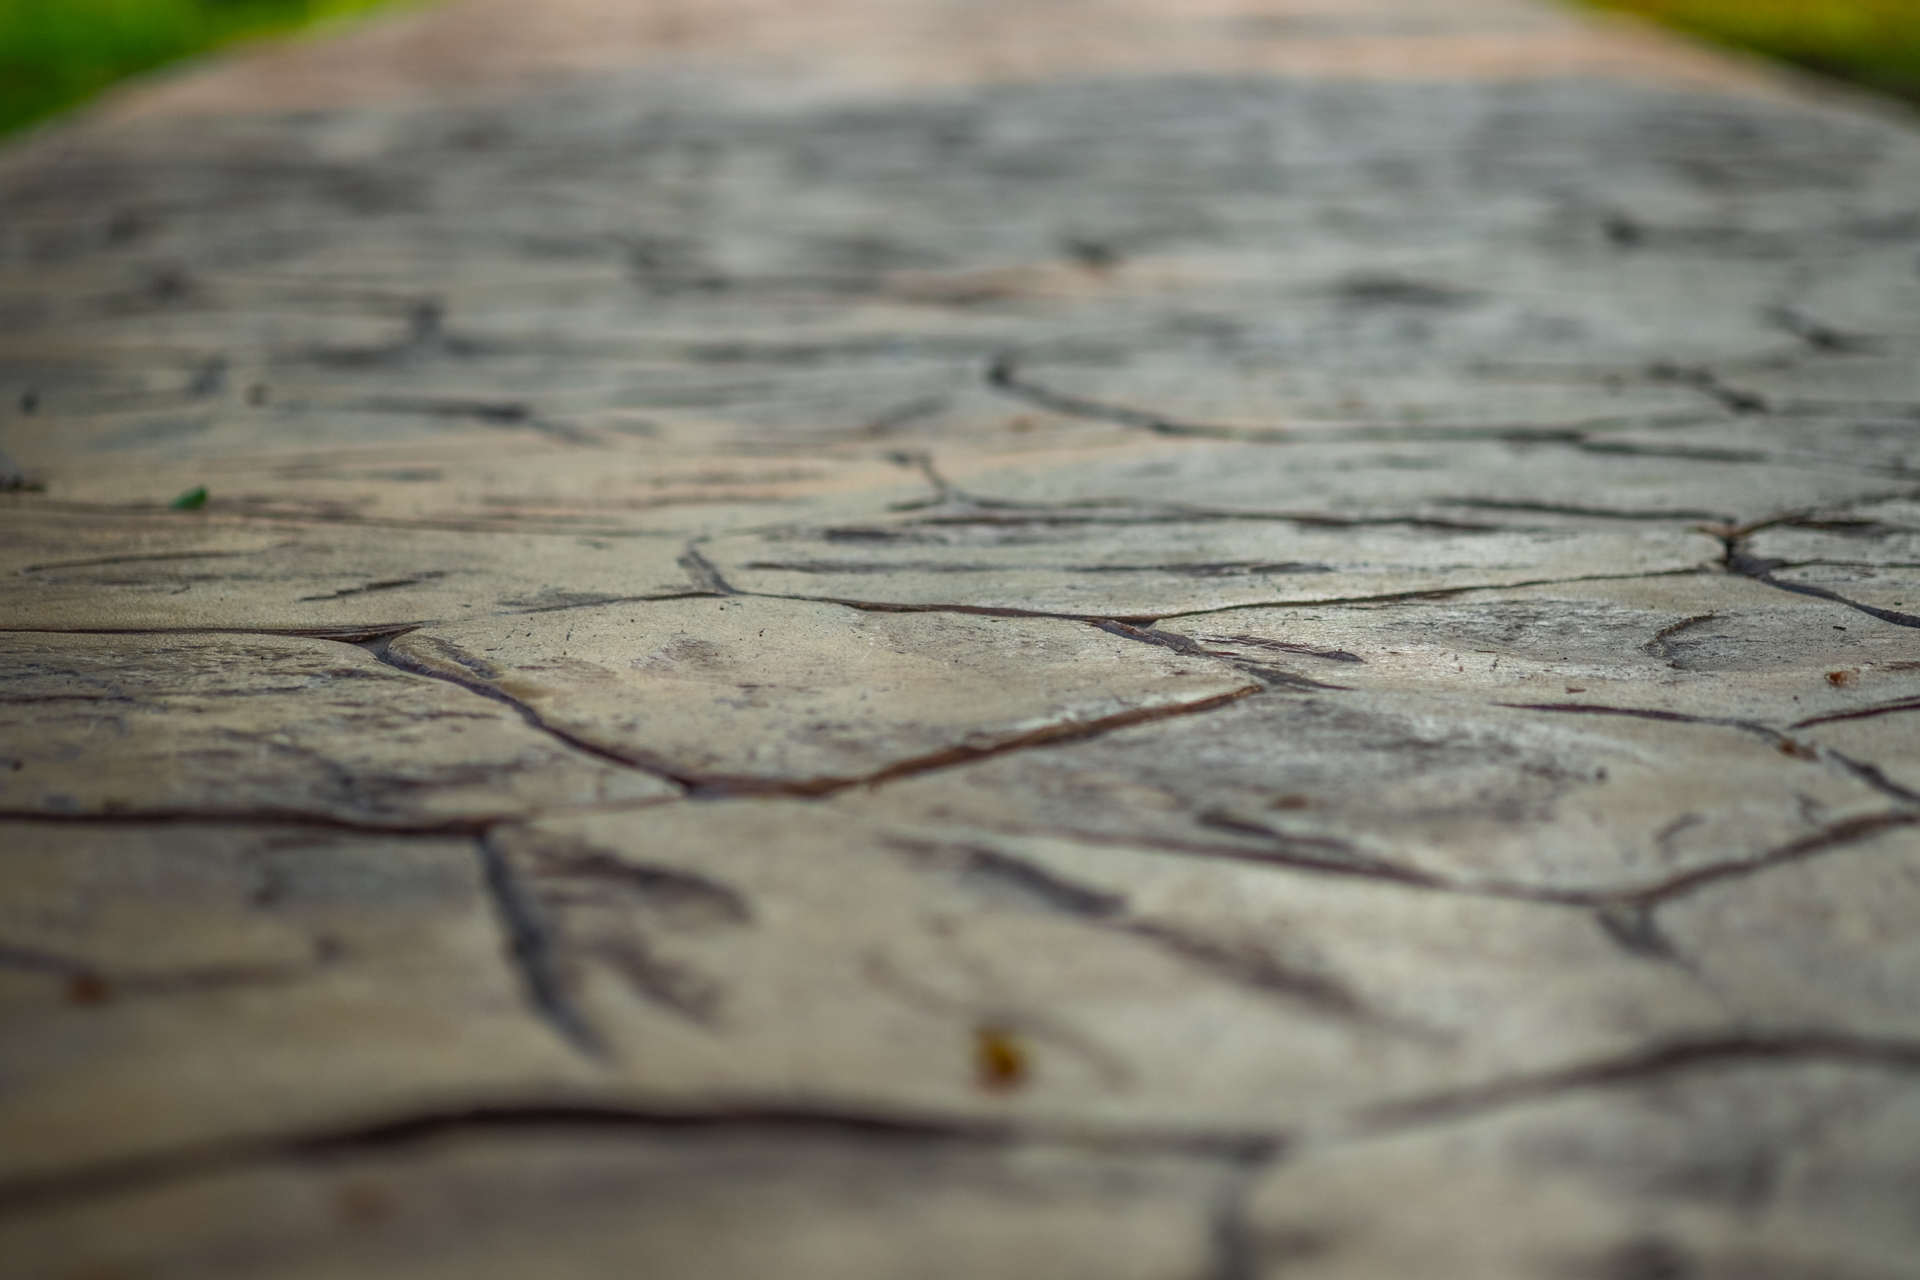 imprinted concrete sidewalk in residential area